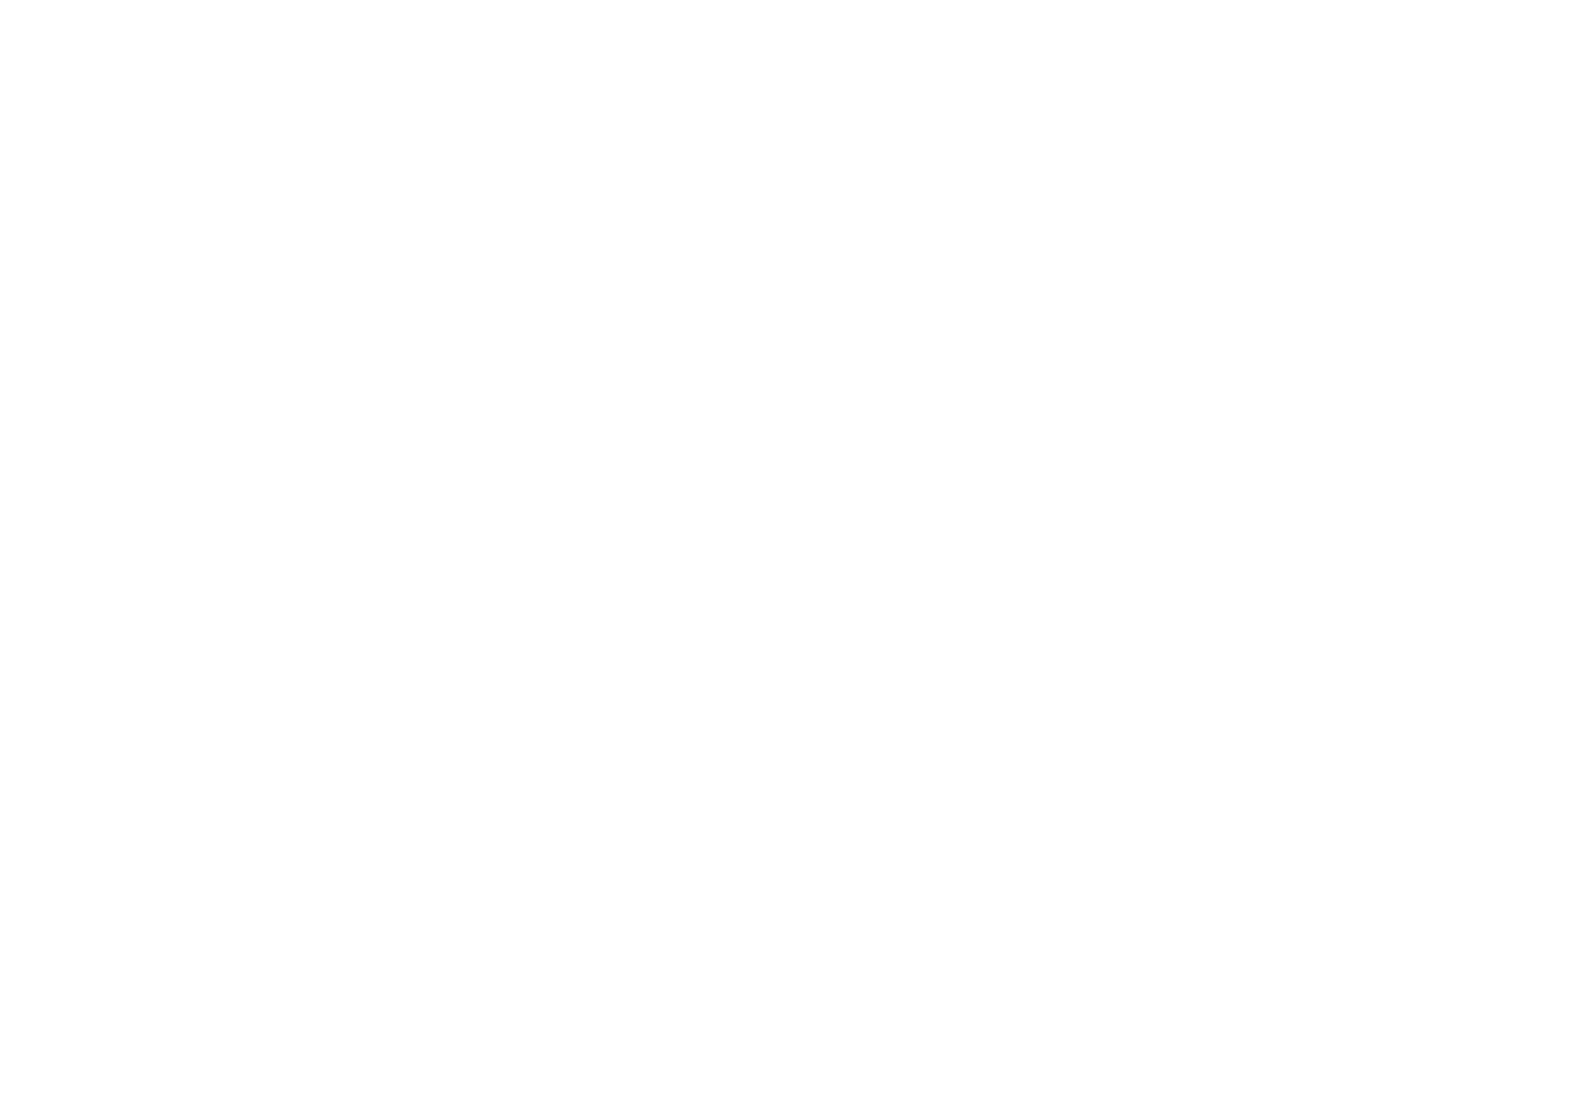 Tri Pointe Homes logo pour fonds sombres (PNG transparent)